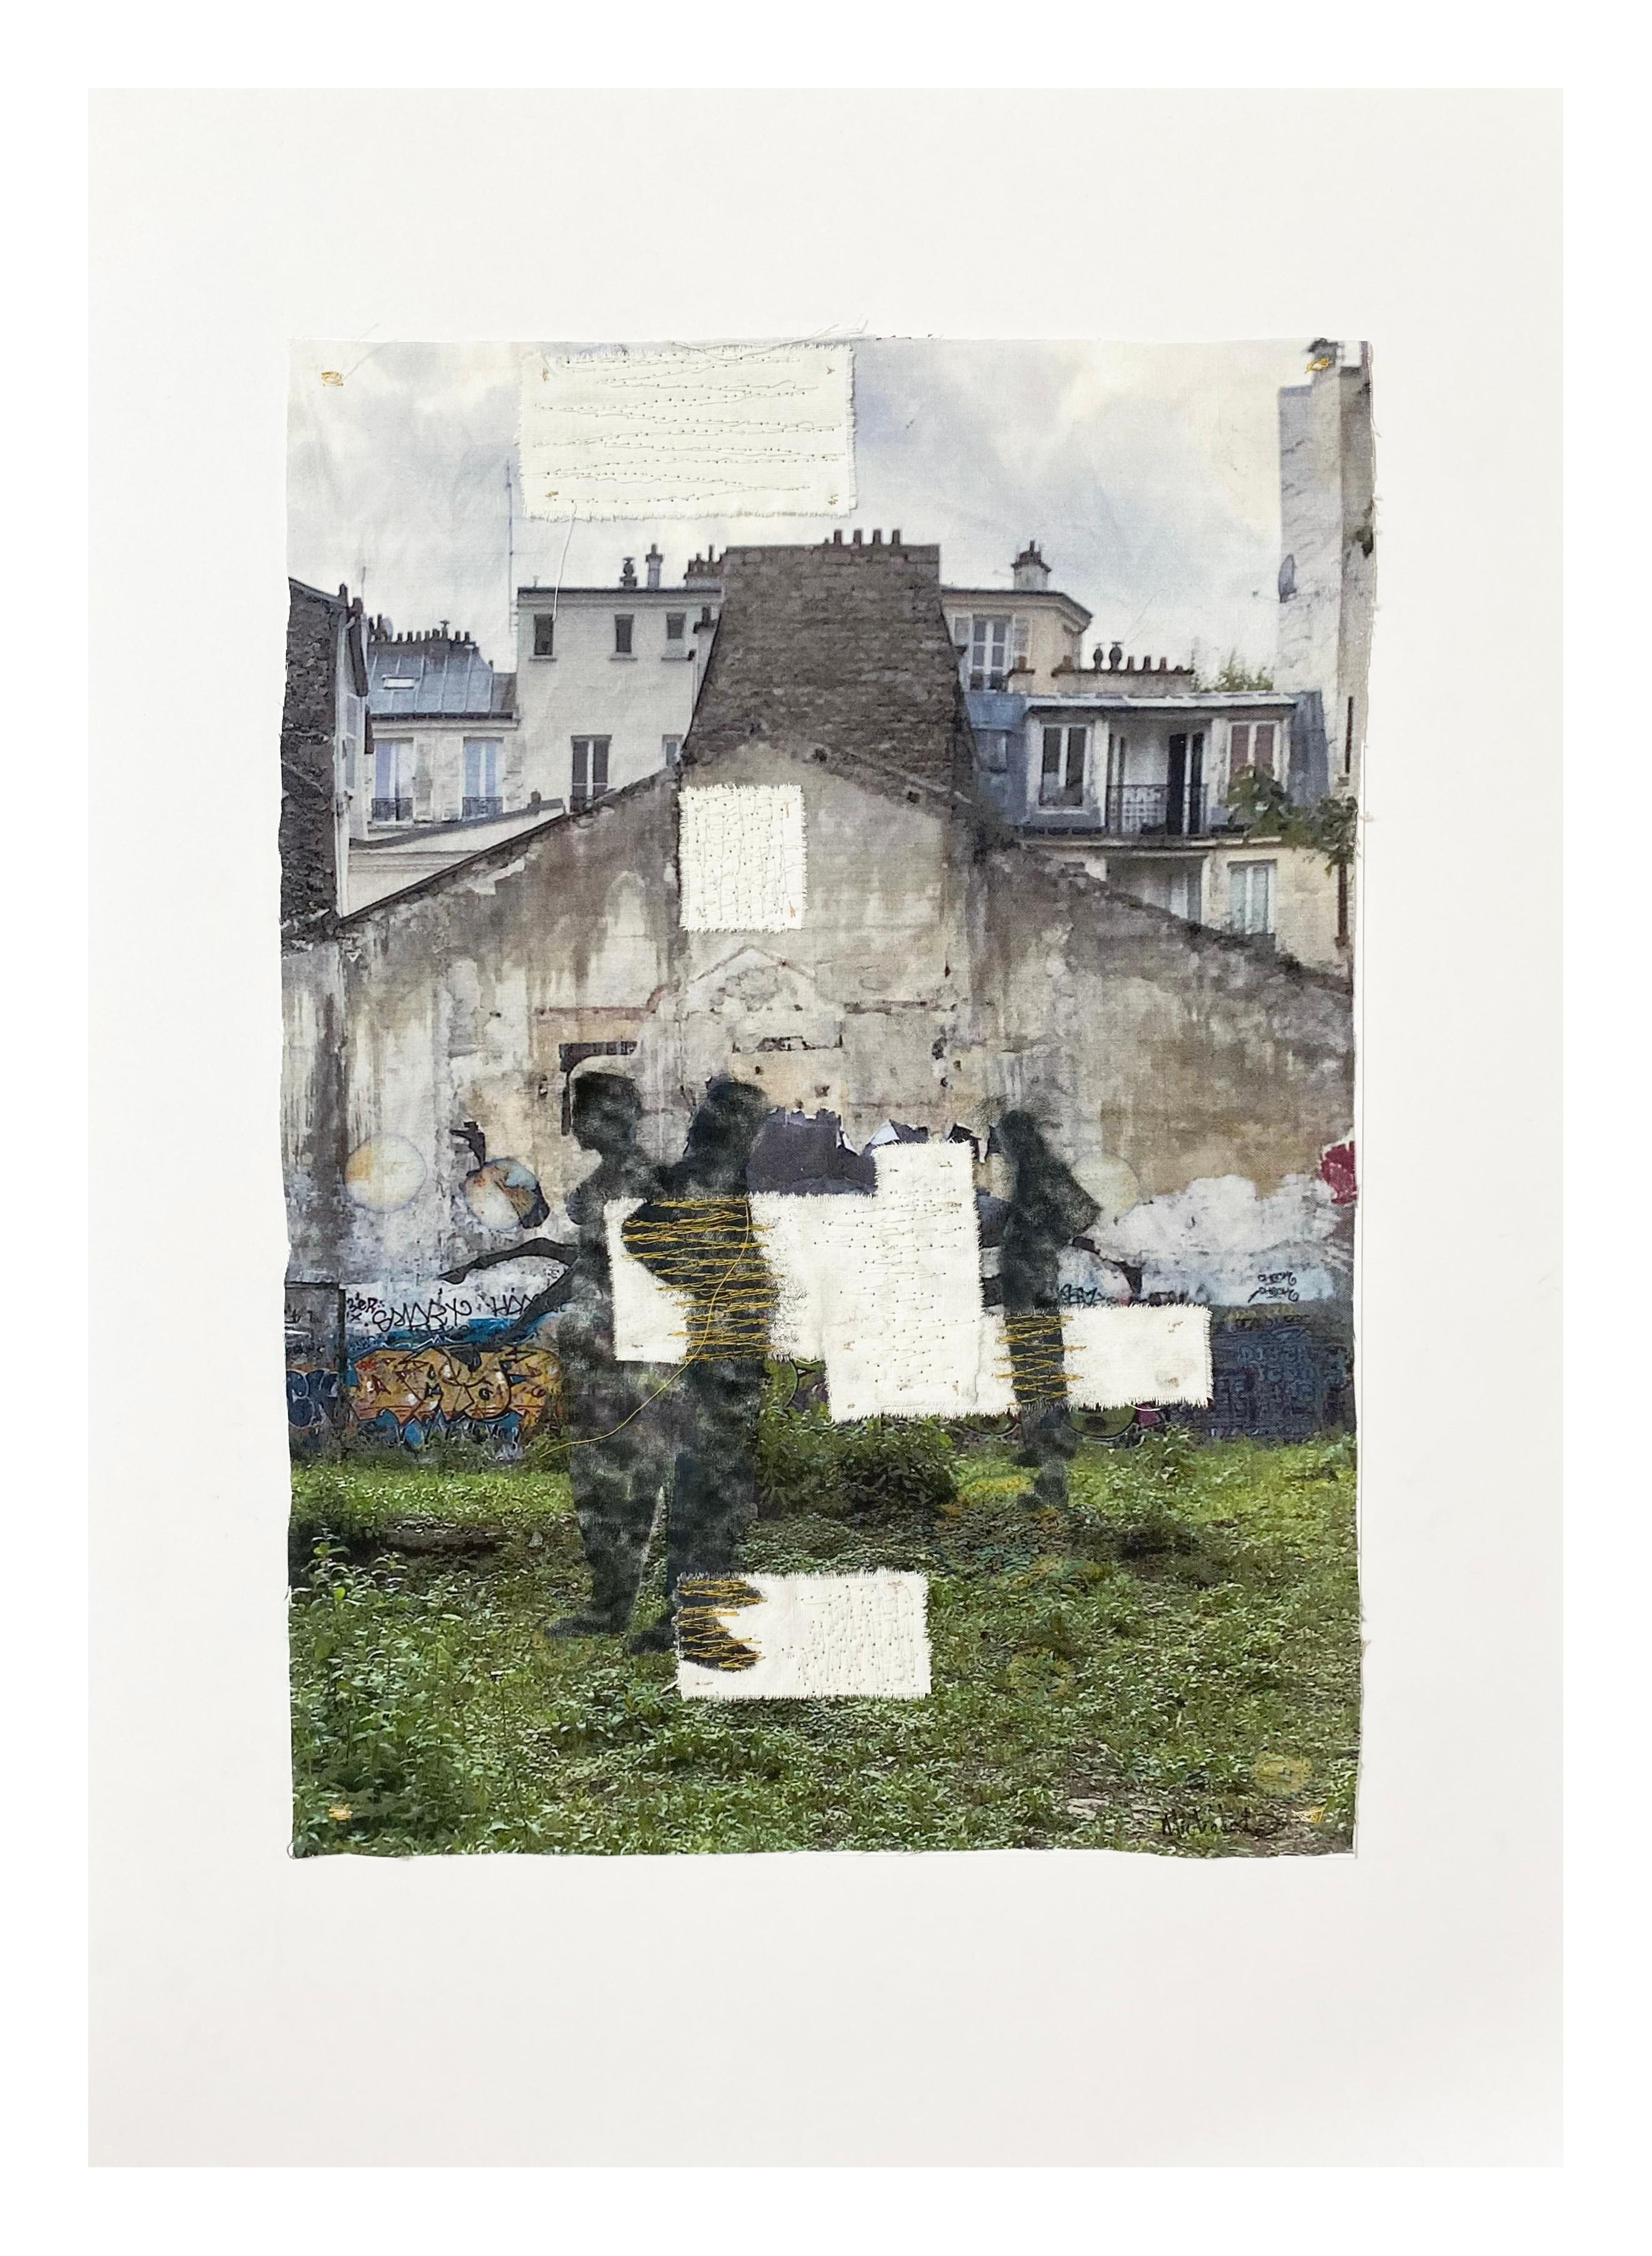 Michele Landel Figurative Photograph - Alfred-grey green contemporary figurative photo transfer on paper and thread